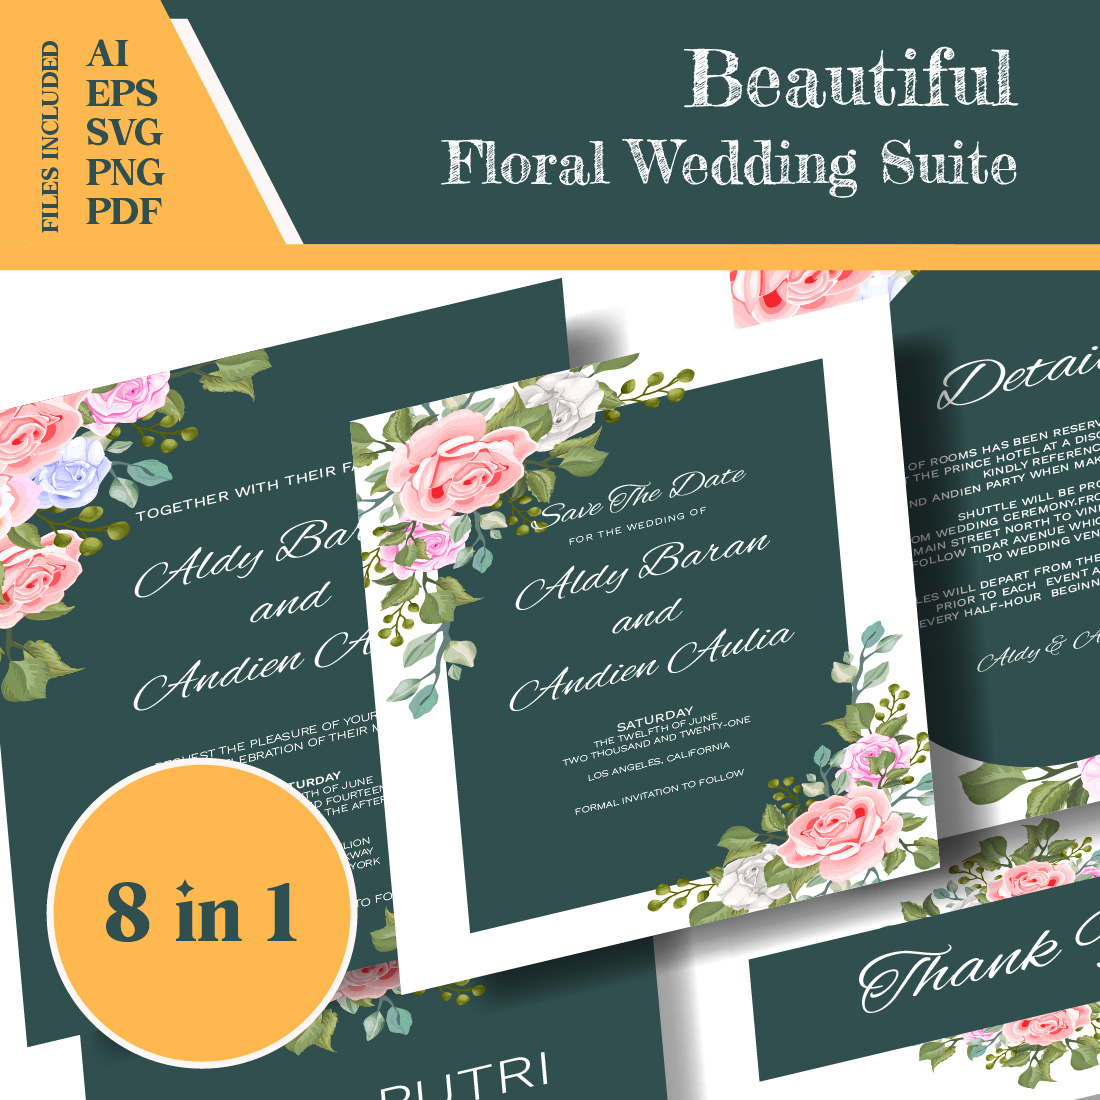 Floral Wedding Suite Set cover image.